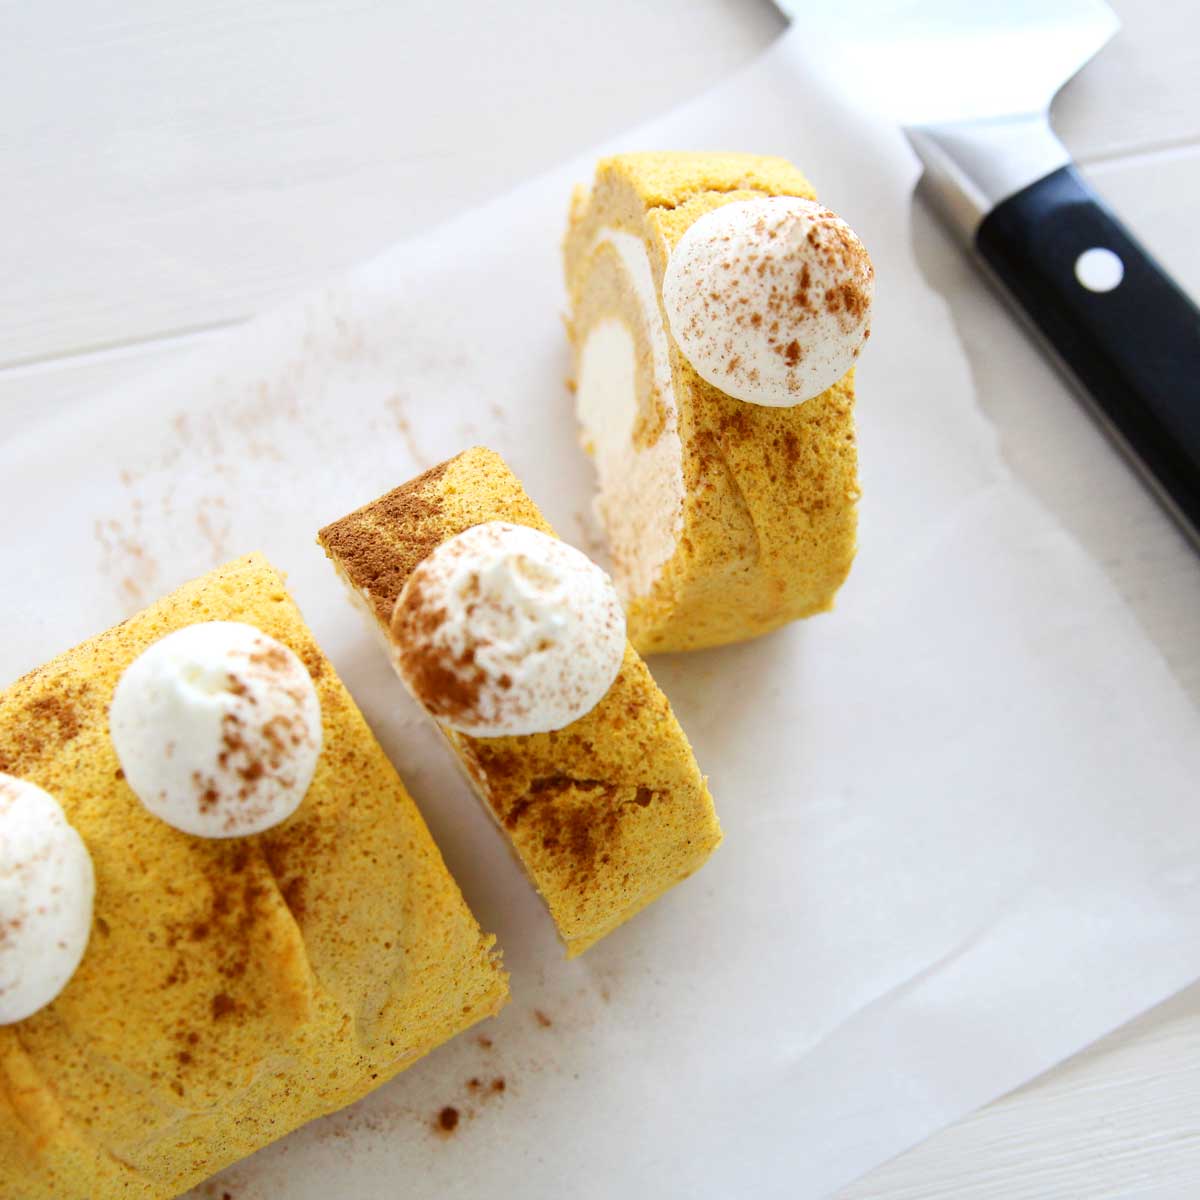 Fall in Love Flourless Pumpkin Roll Cake (The Best Gluten Free Dessert Recipe!) - Sweet Potato Scones